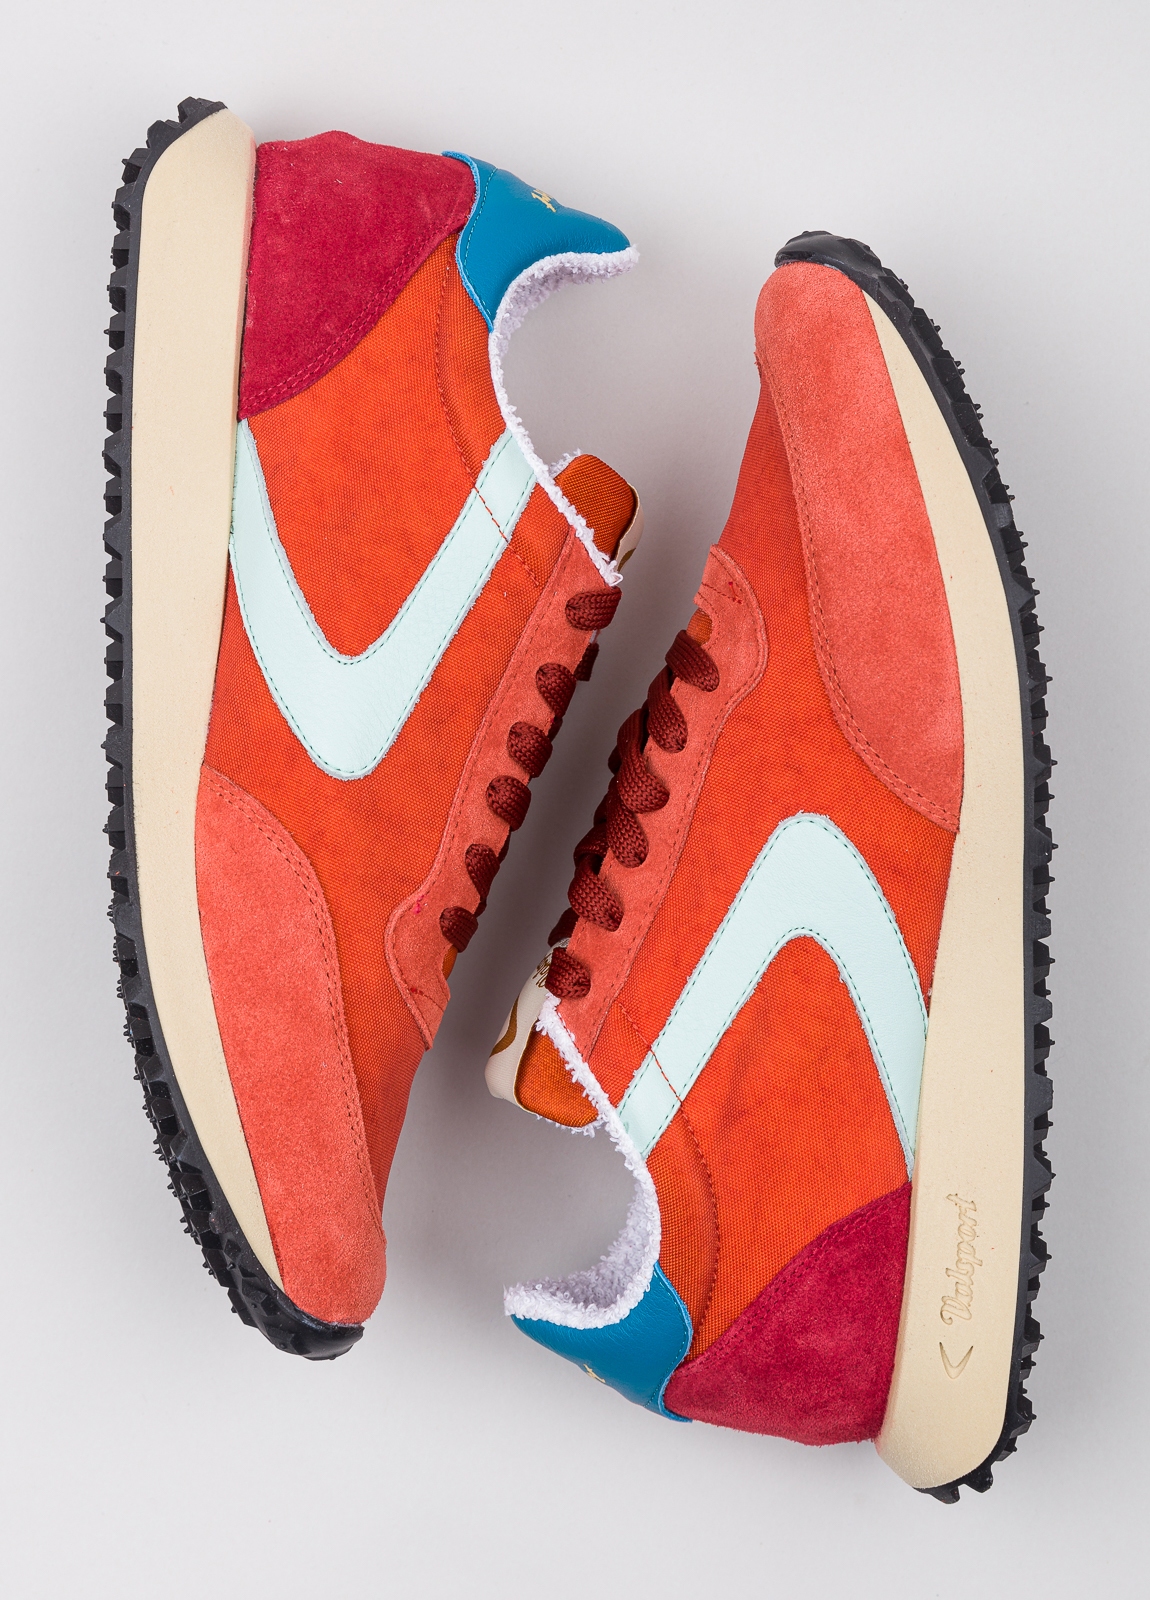 Sneakers VALSPORT naranja con detalles azul y blanco - Ítem1